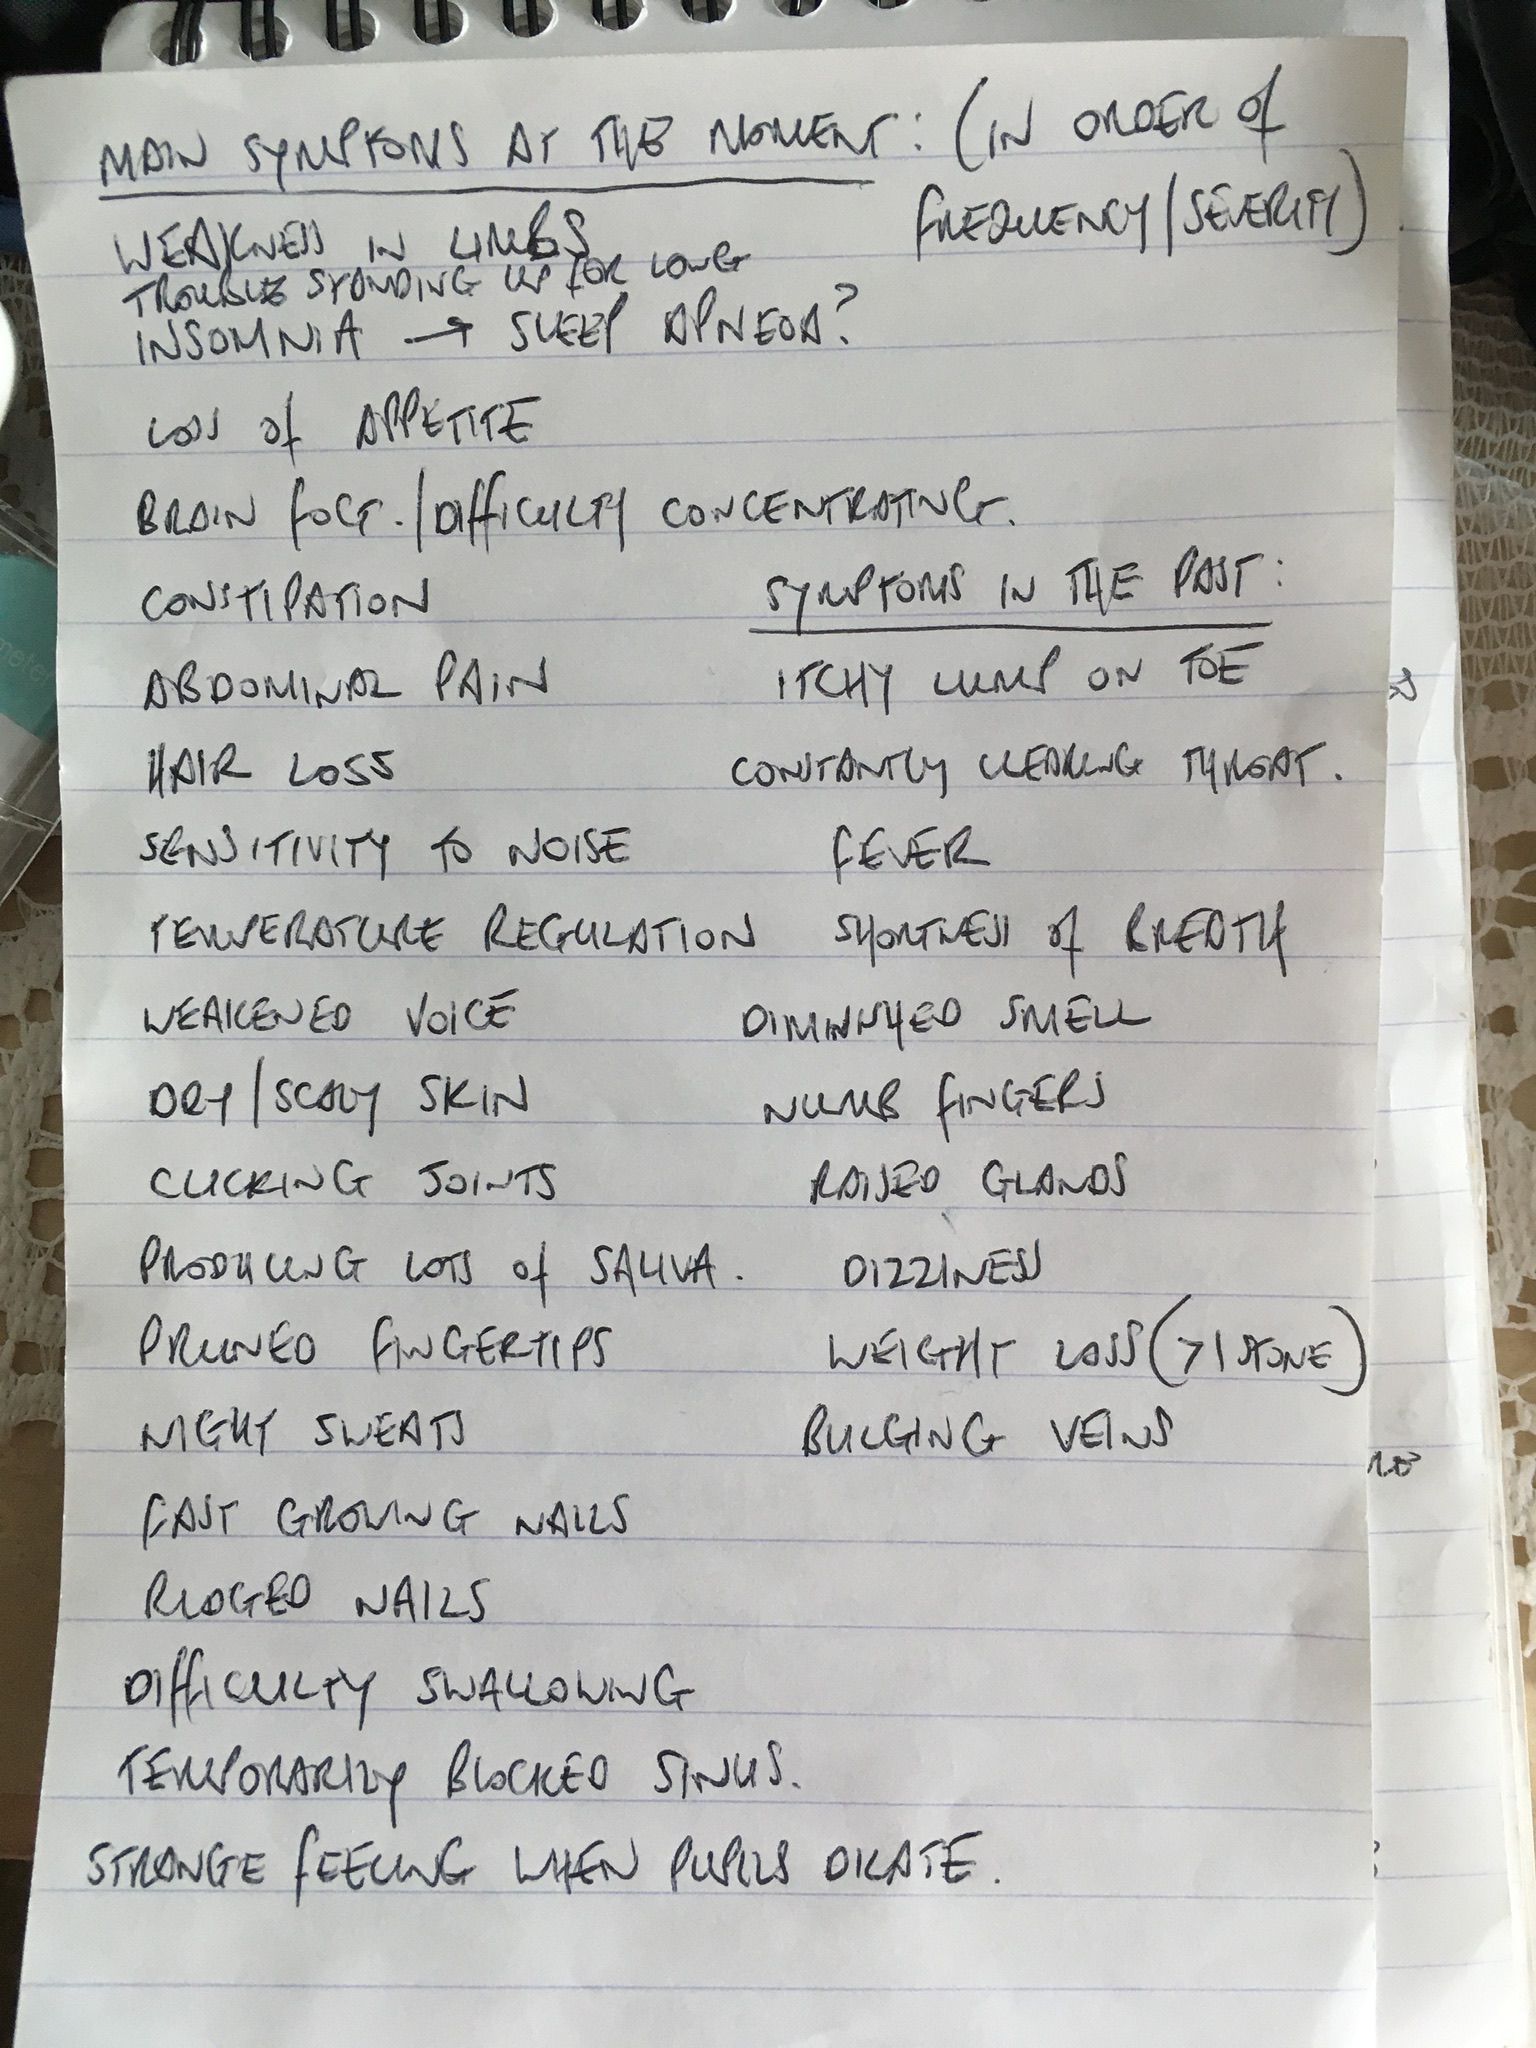 Gareth's list of symptoms